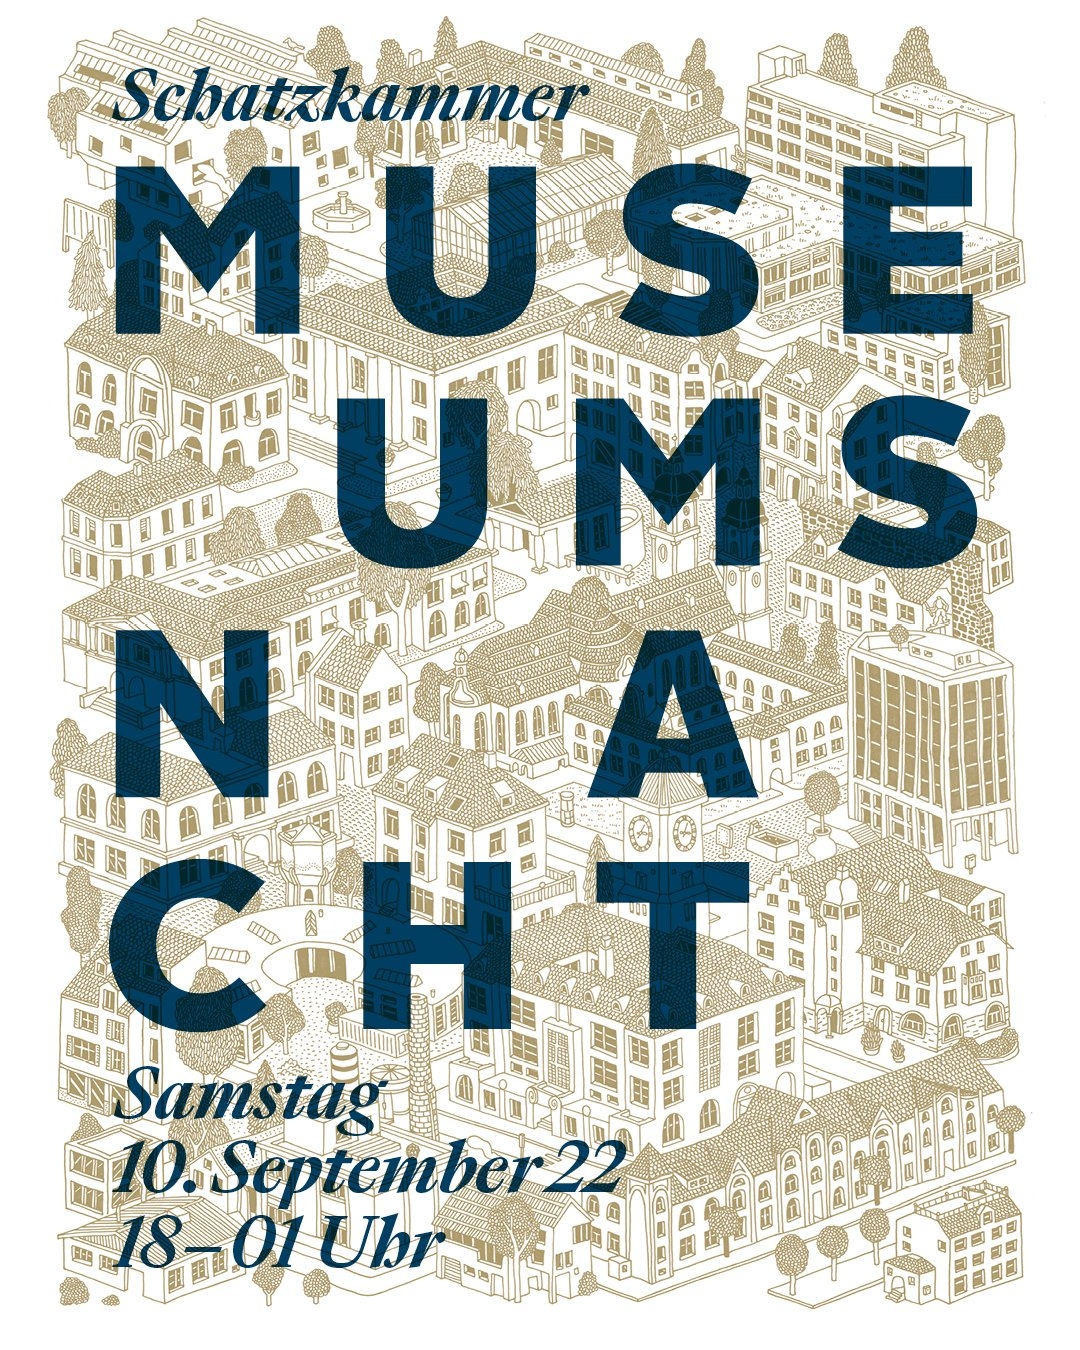 Logo Museumsnacht